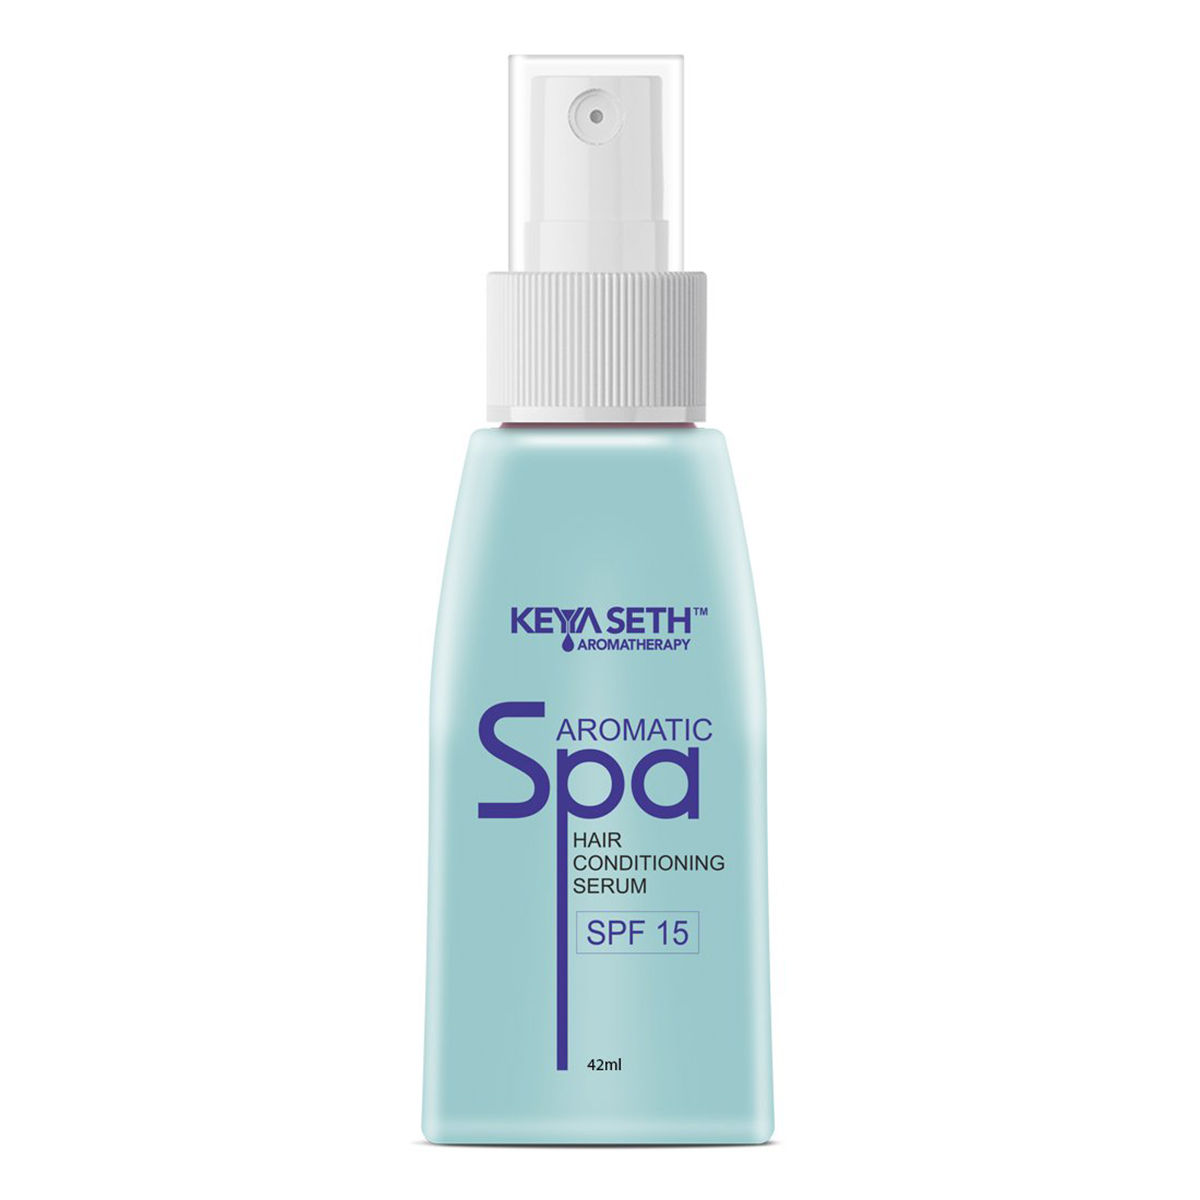 Buy Keya Seth Aromatherapy, Aromatic Spa Hair Conditions Serum SPF 15-for Dry, Rough Hair, 42ml - Purplle